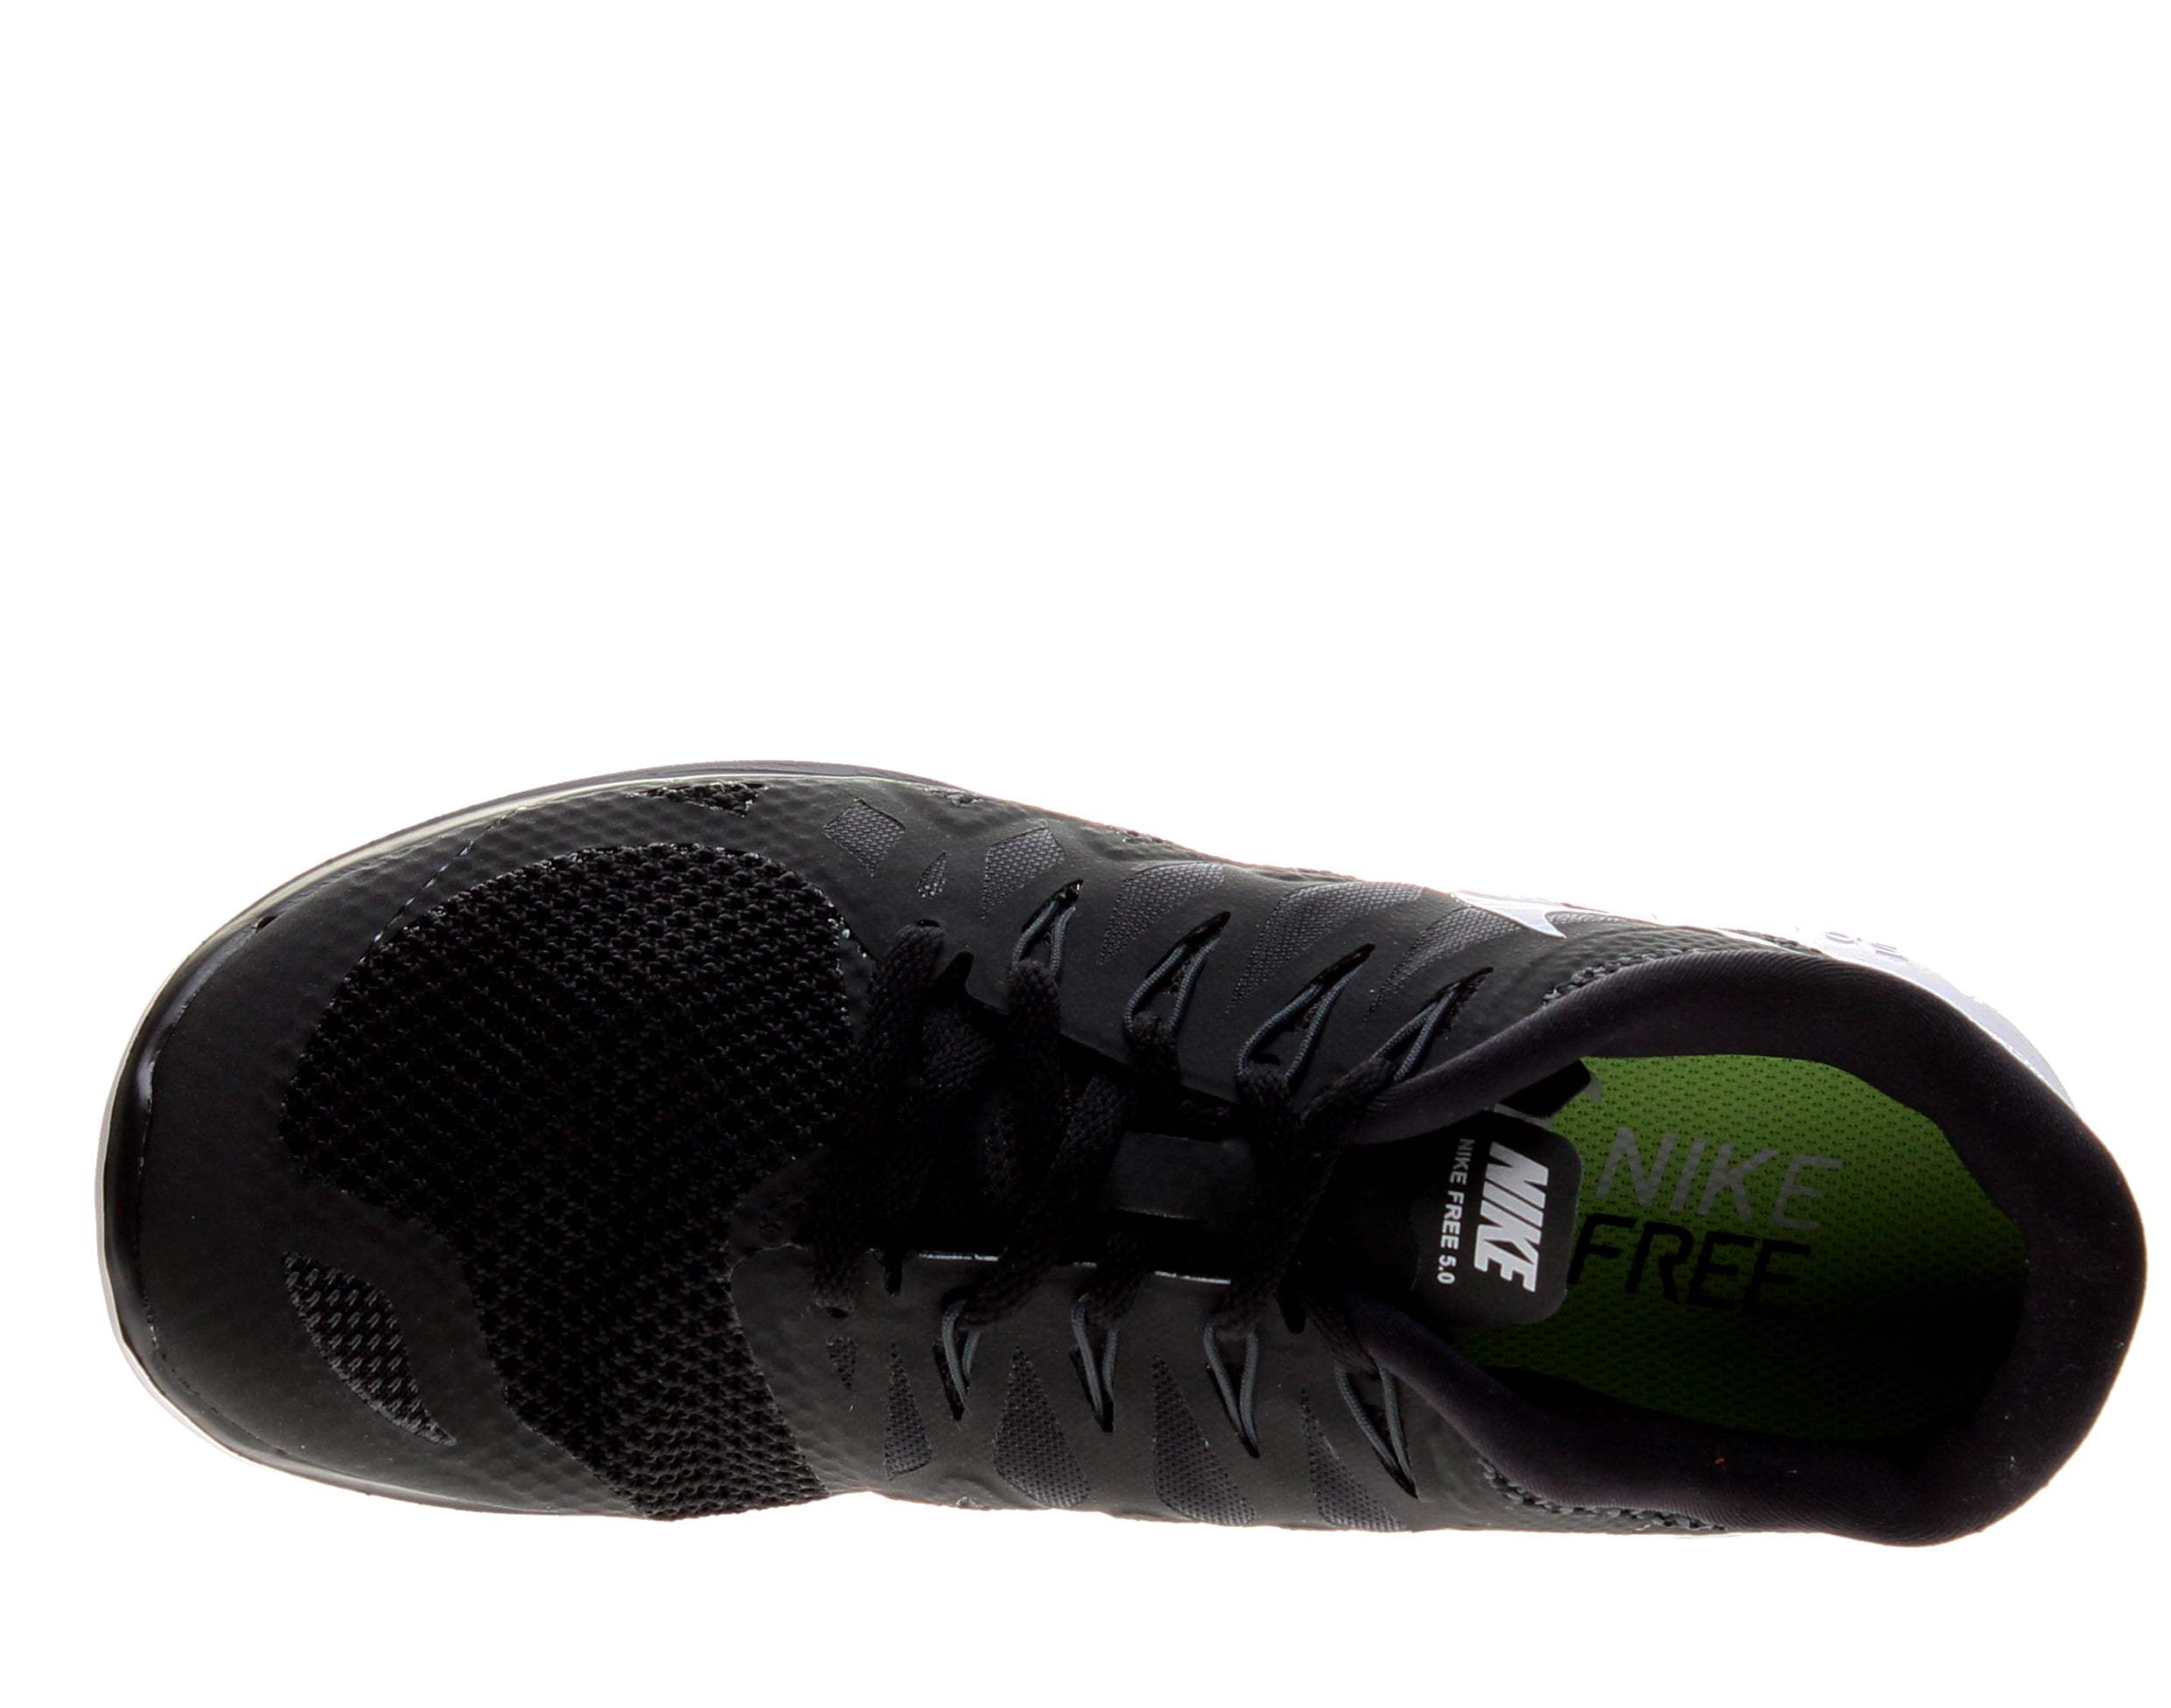 Nike Men's 5.0 Black/White/Anthracite Running Shoes Walmart.com